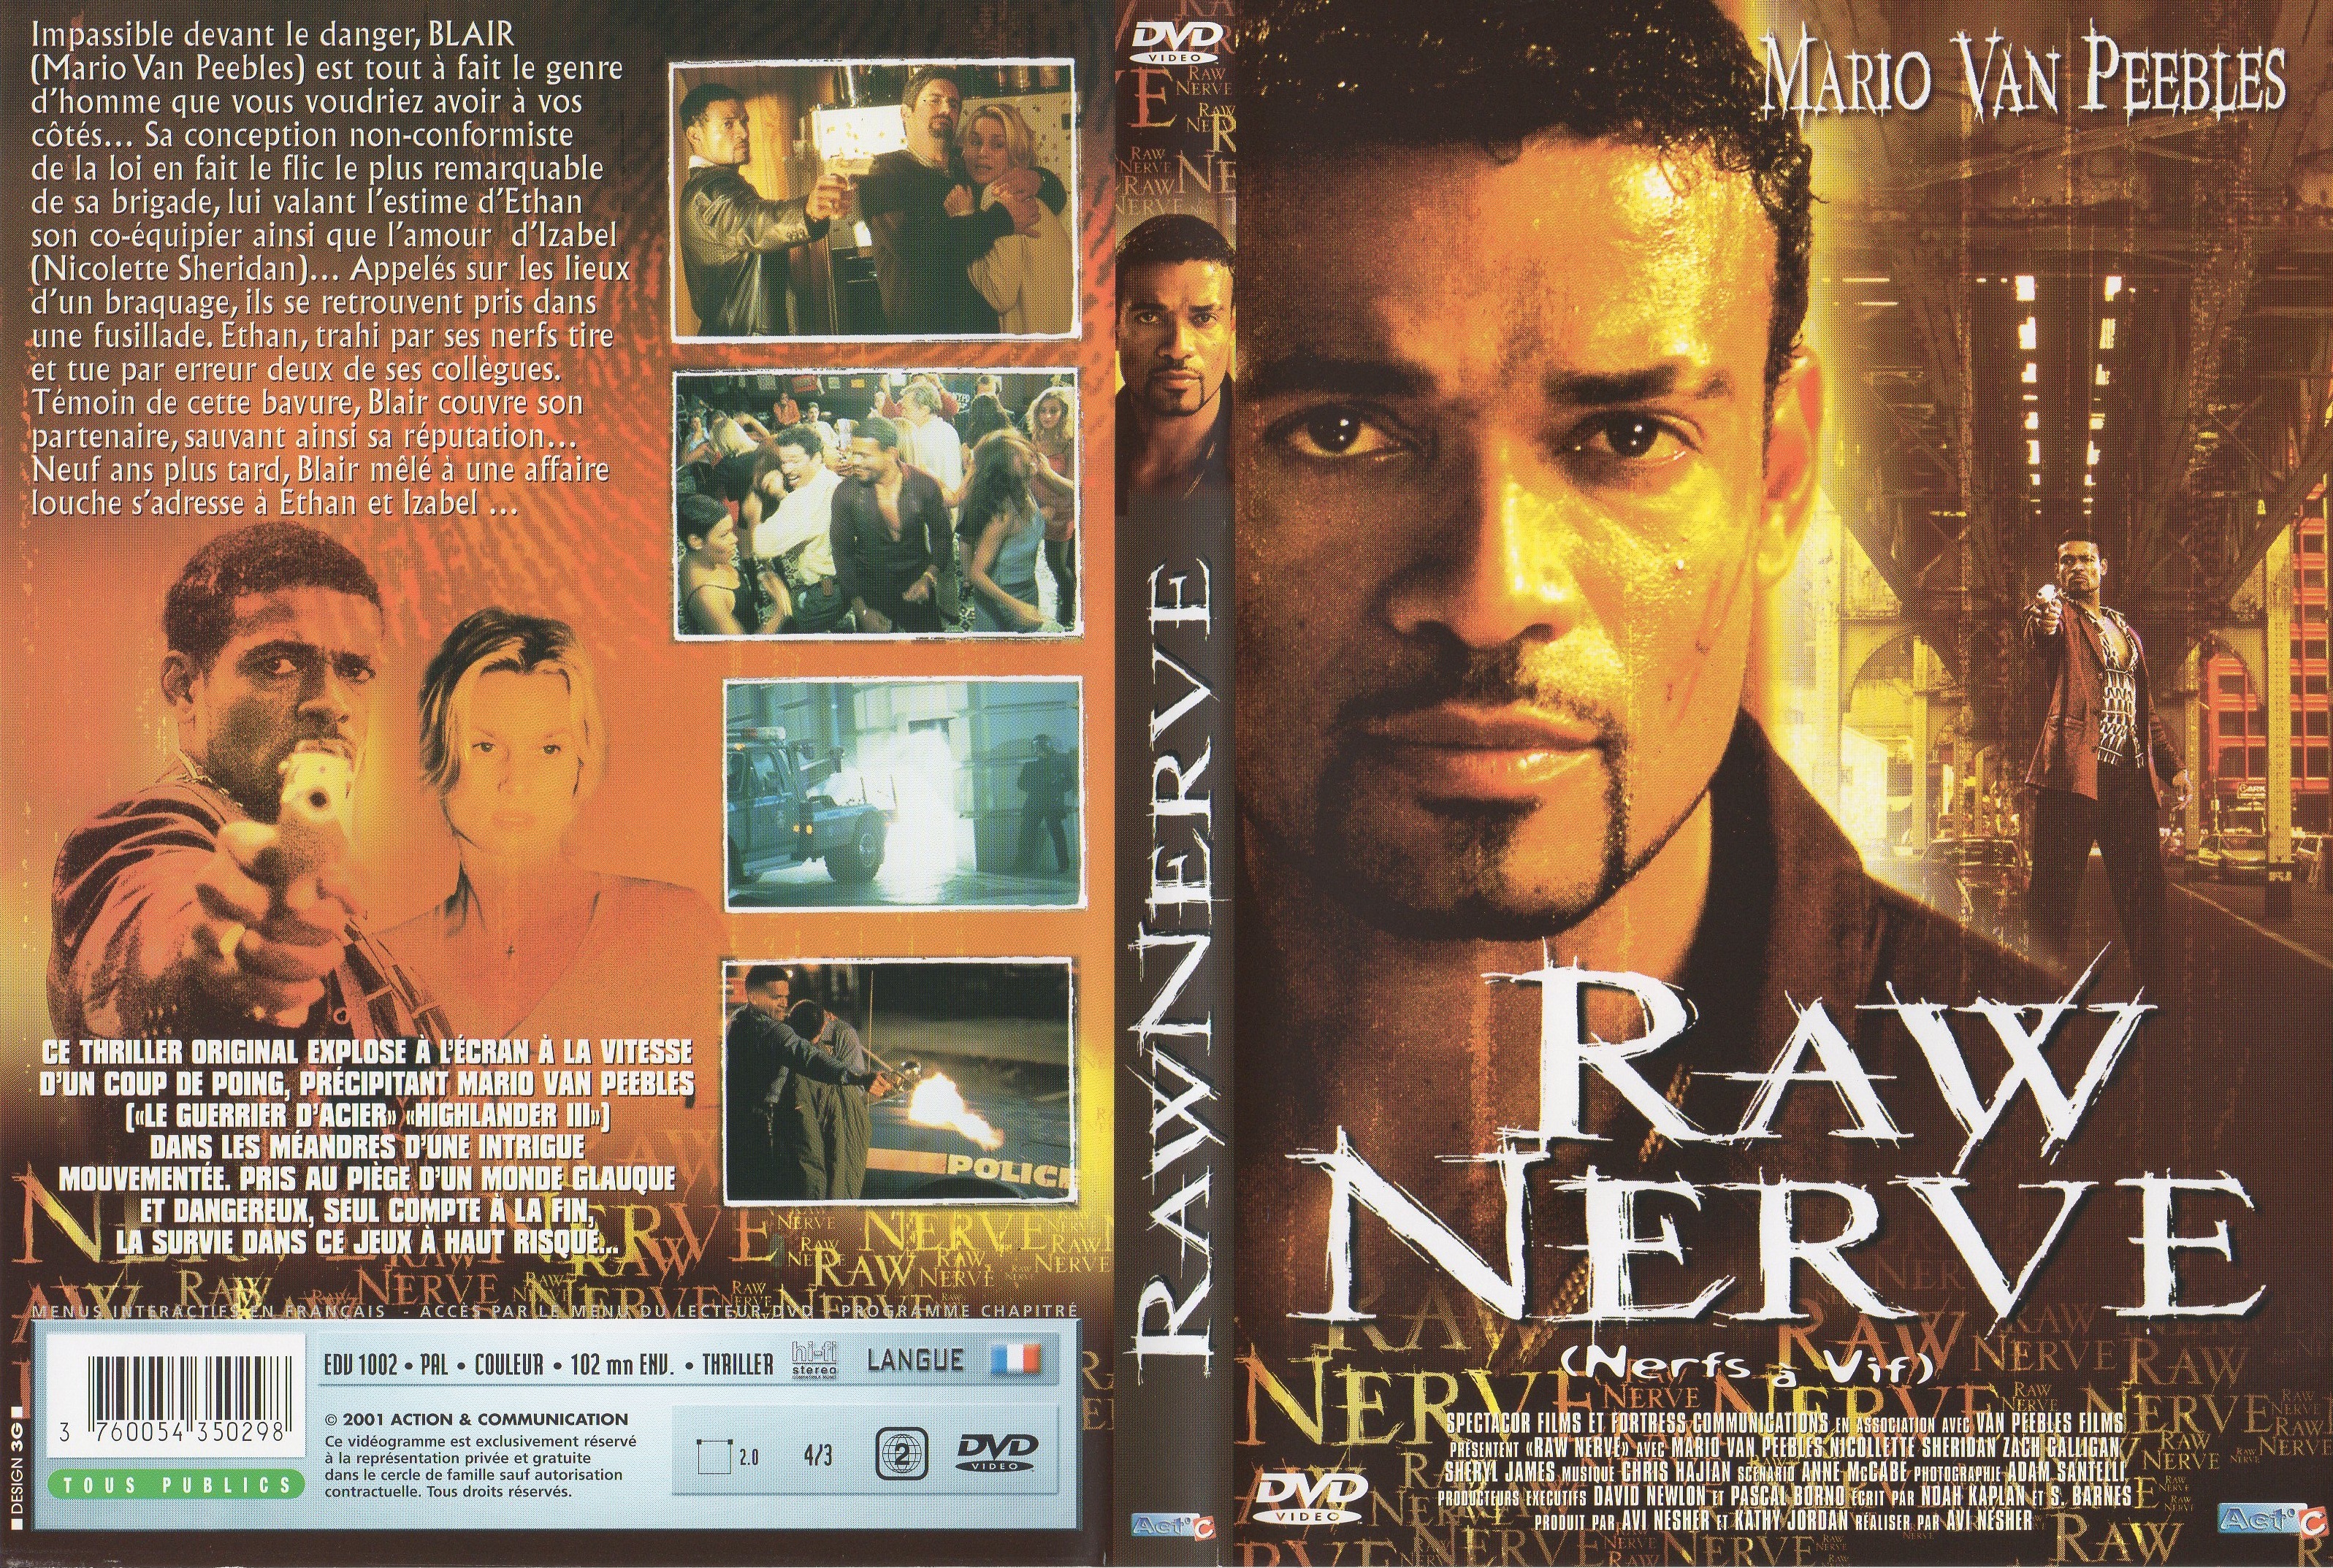 Jaquette DVD Raw nerve - Nerfs  vif